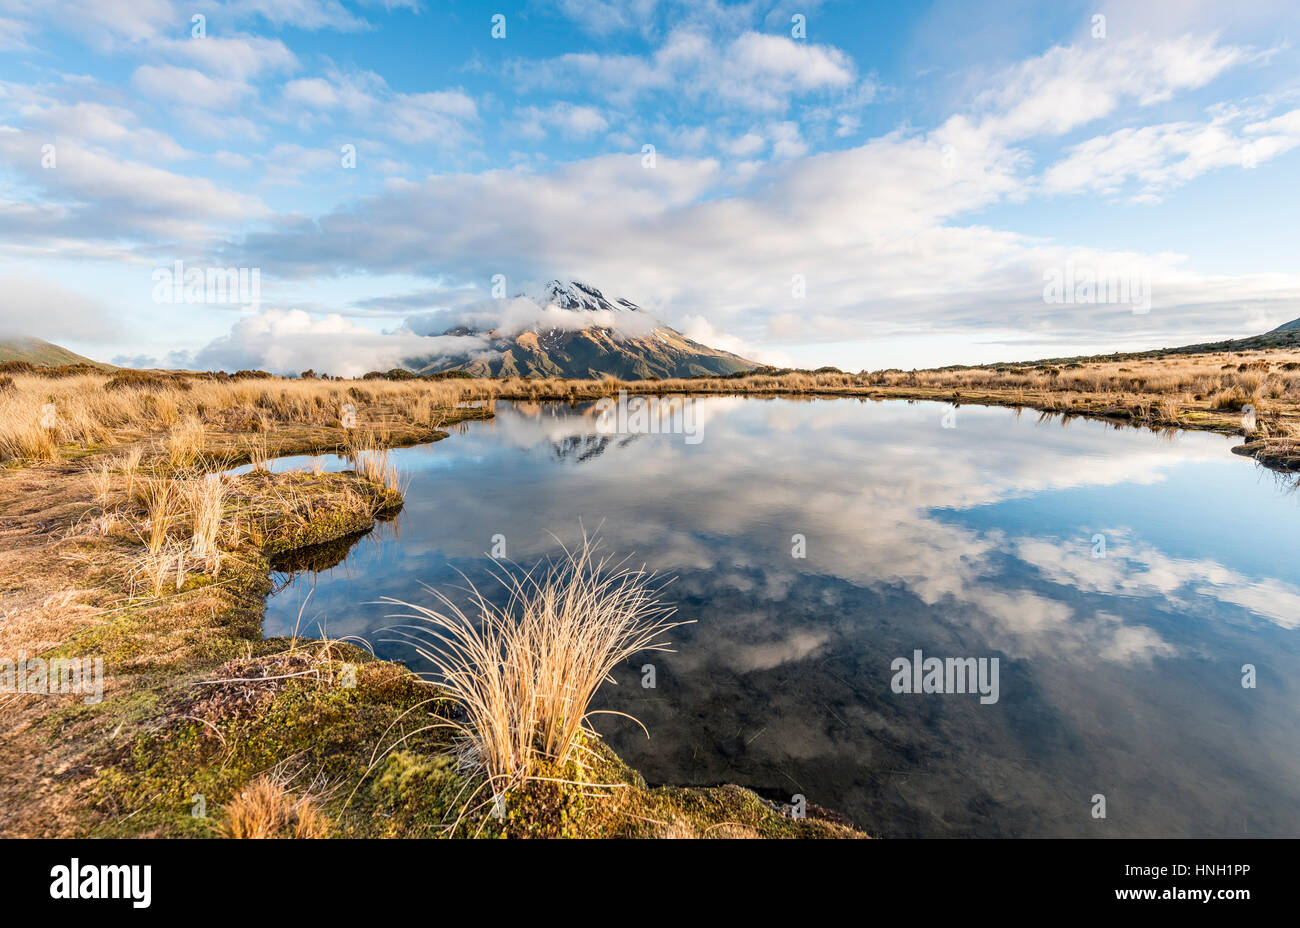 Reflection in Pouakai Tarn, stratovolcano Mount Taranaki or Mount Egmont, Egmont National Park, Taranaki, New Zealand Stock Photo